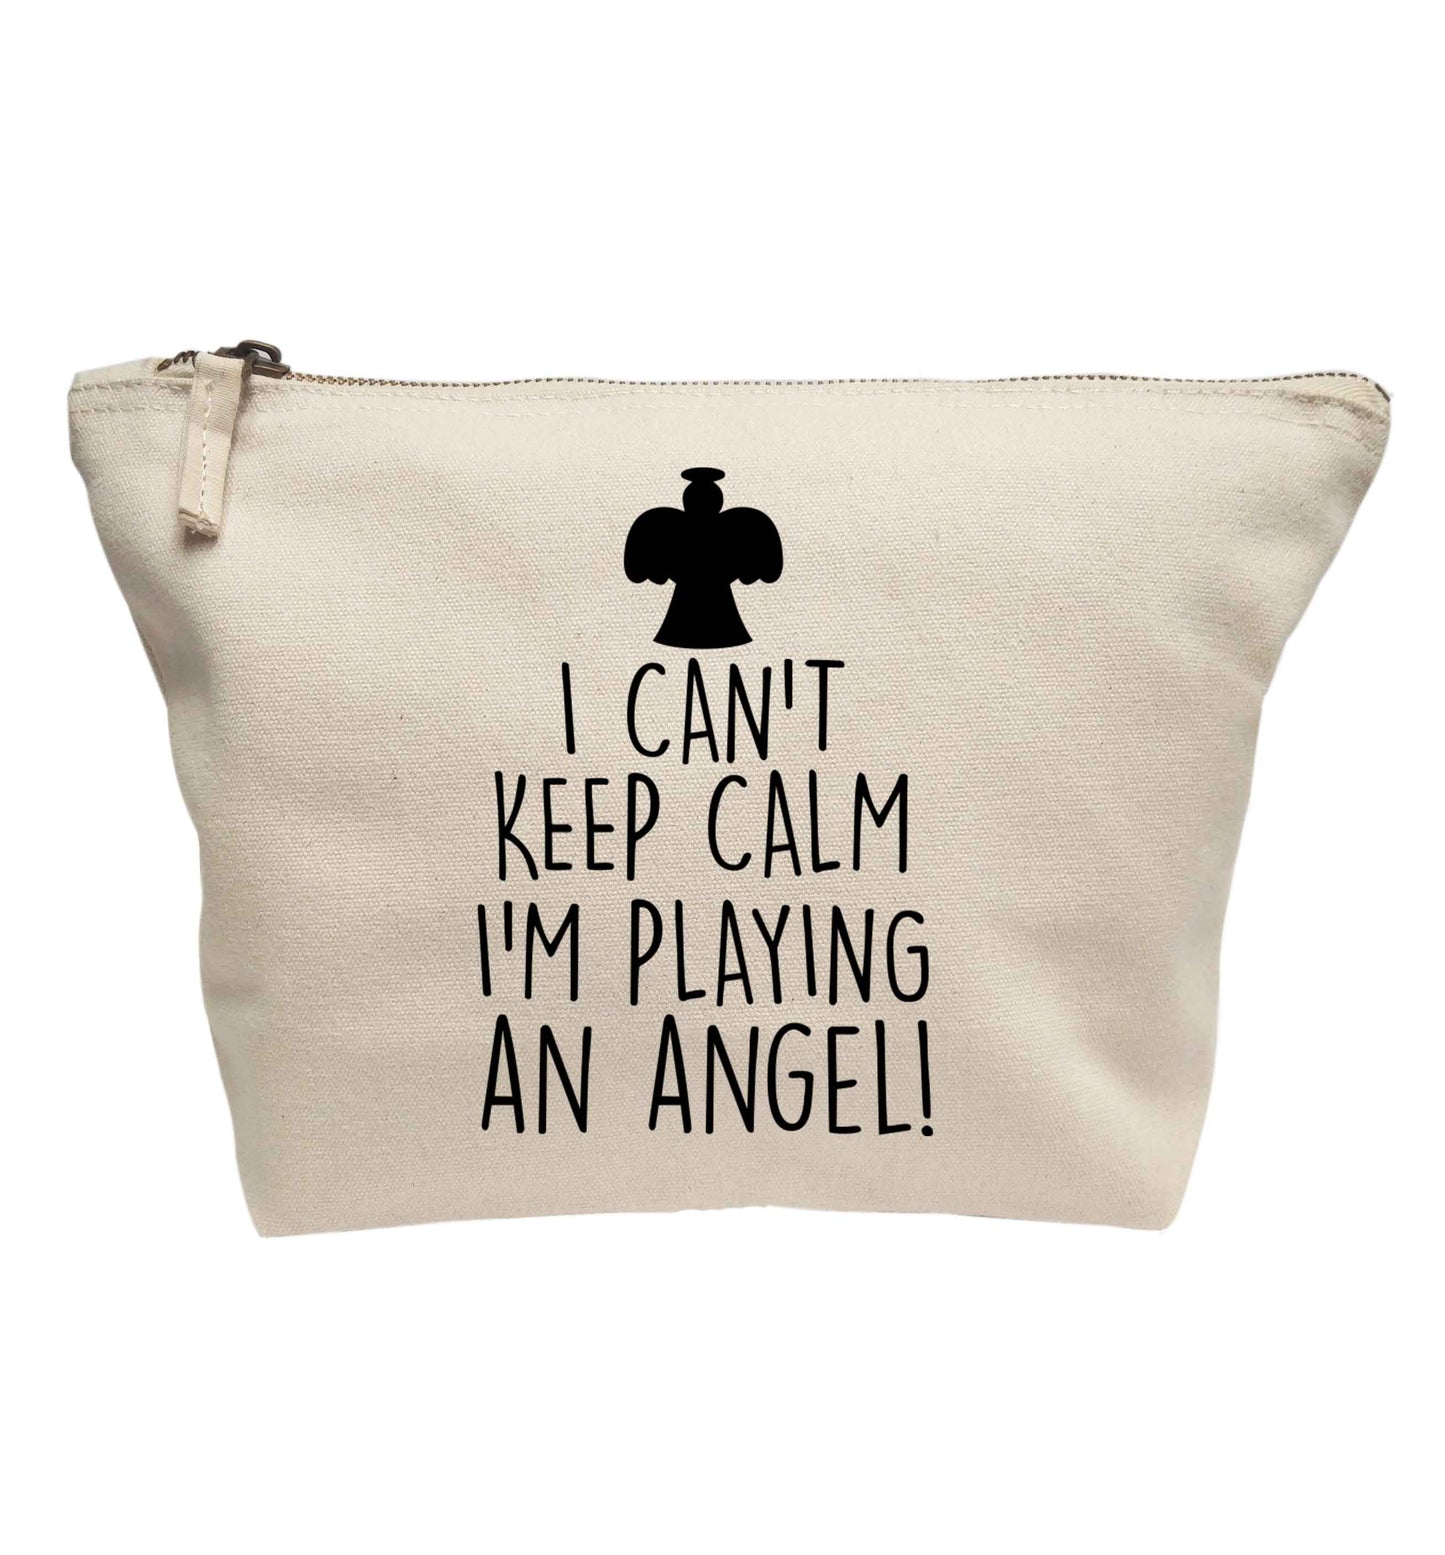 I can't keep calm I'm playing an angel! | makeup / wash bag